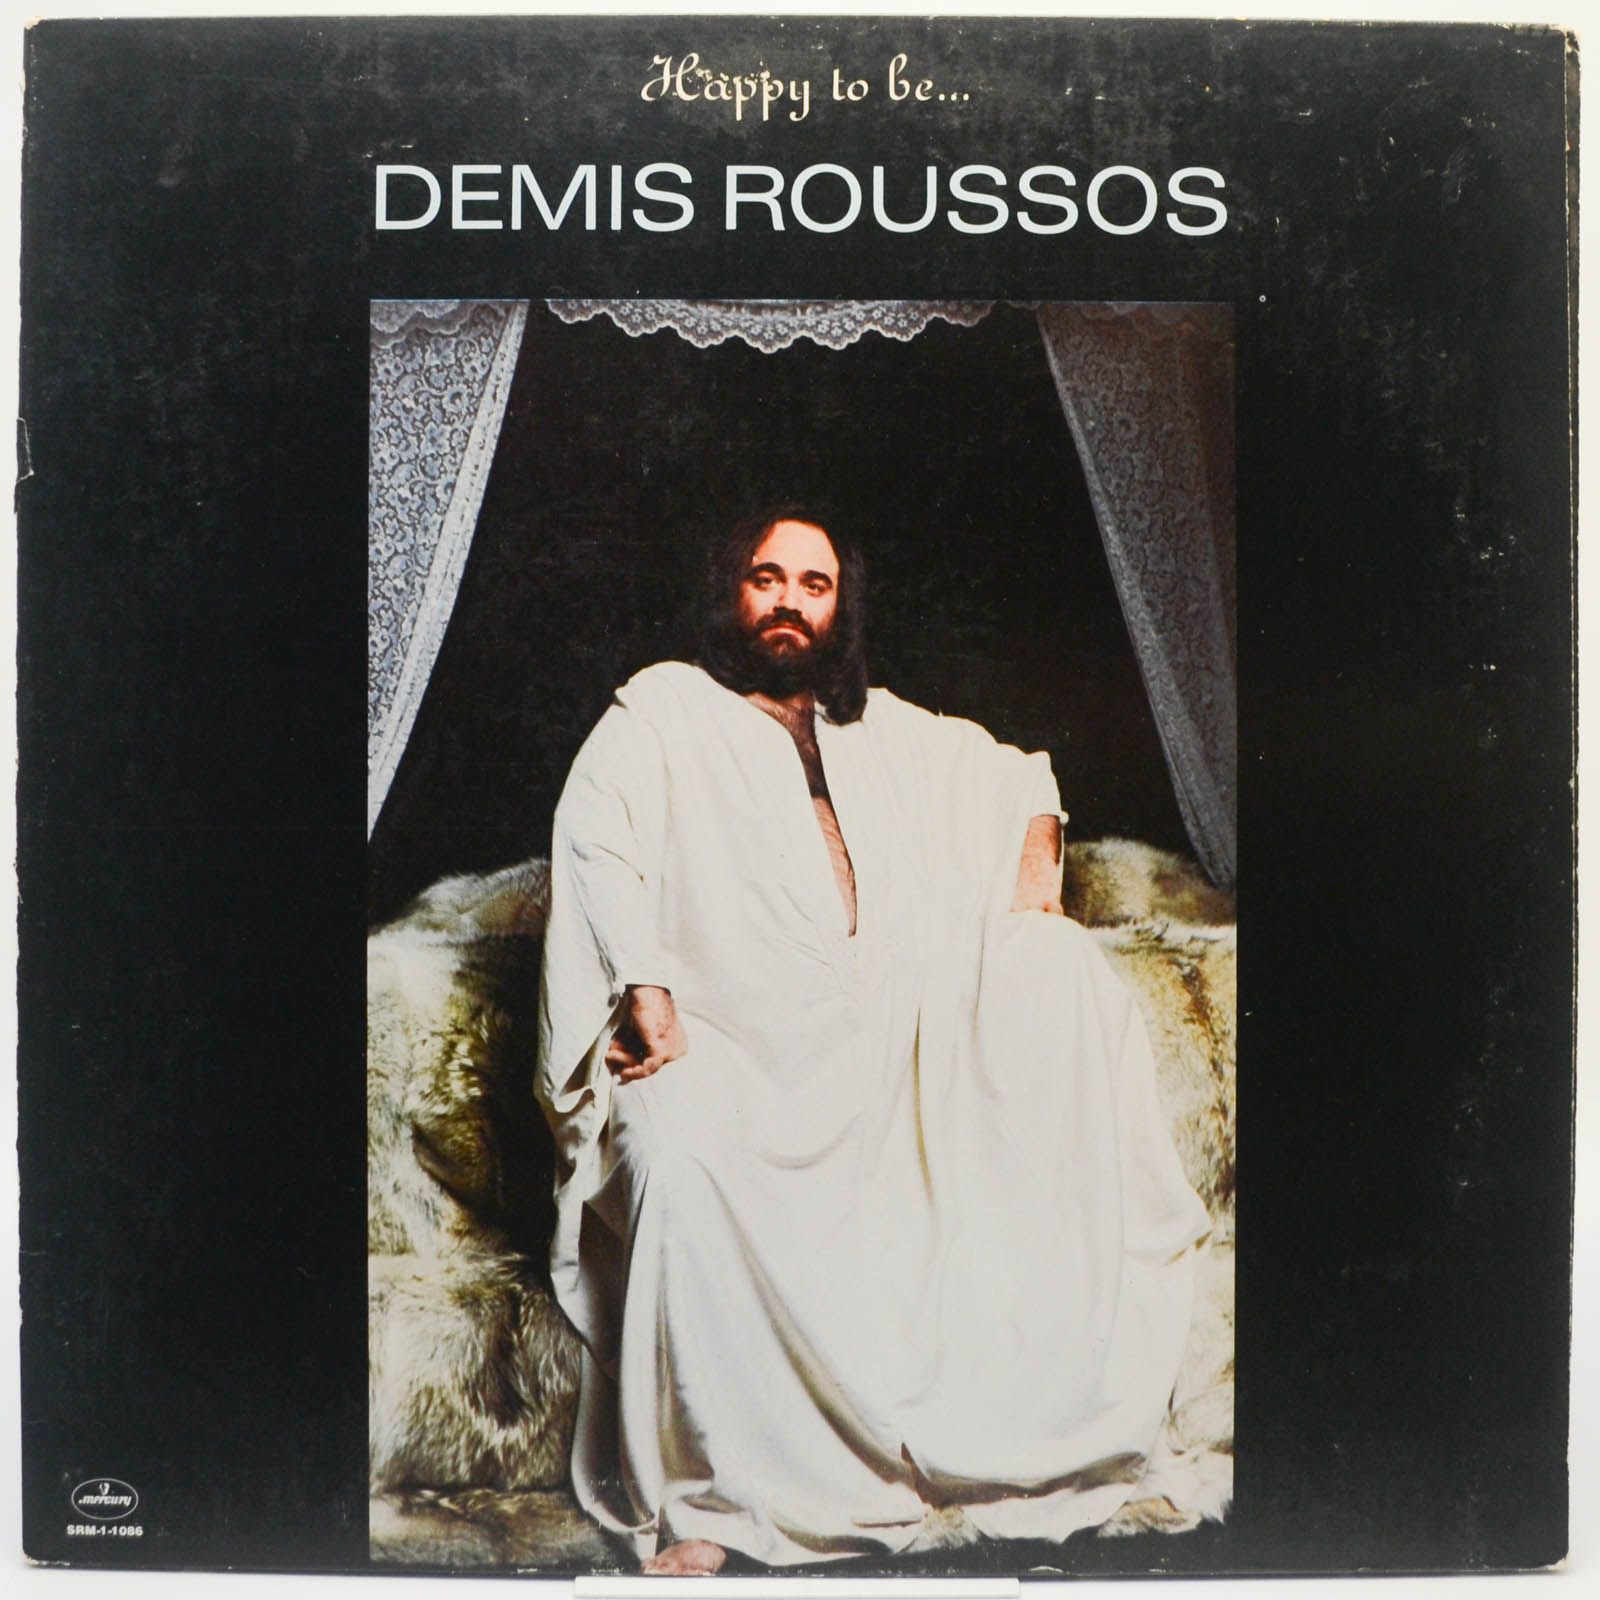 Demis Roussos — Happy To Be... (USA), 1976